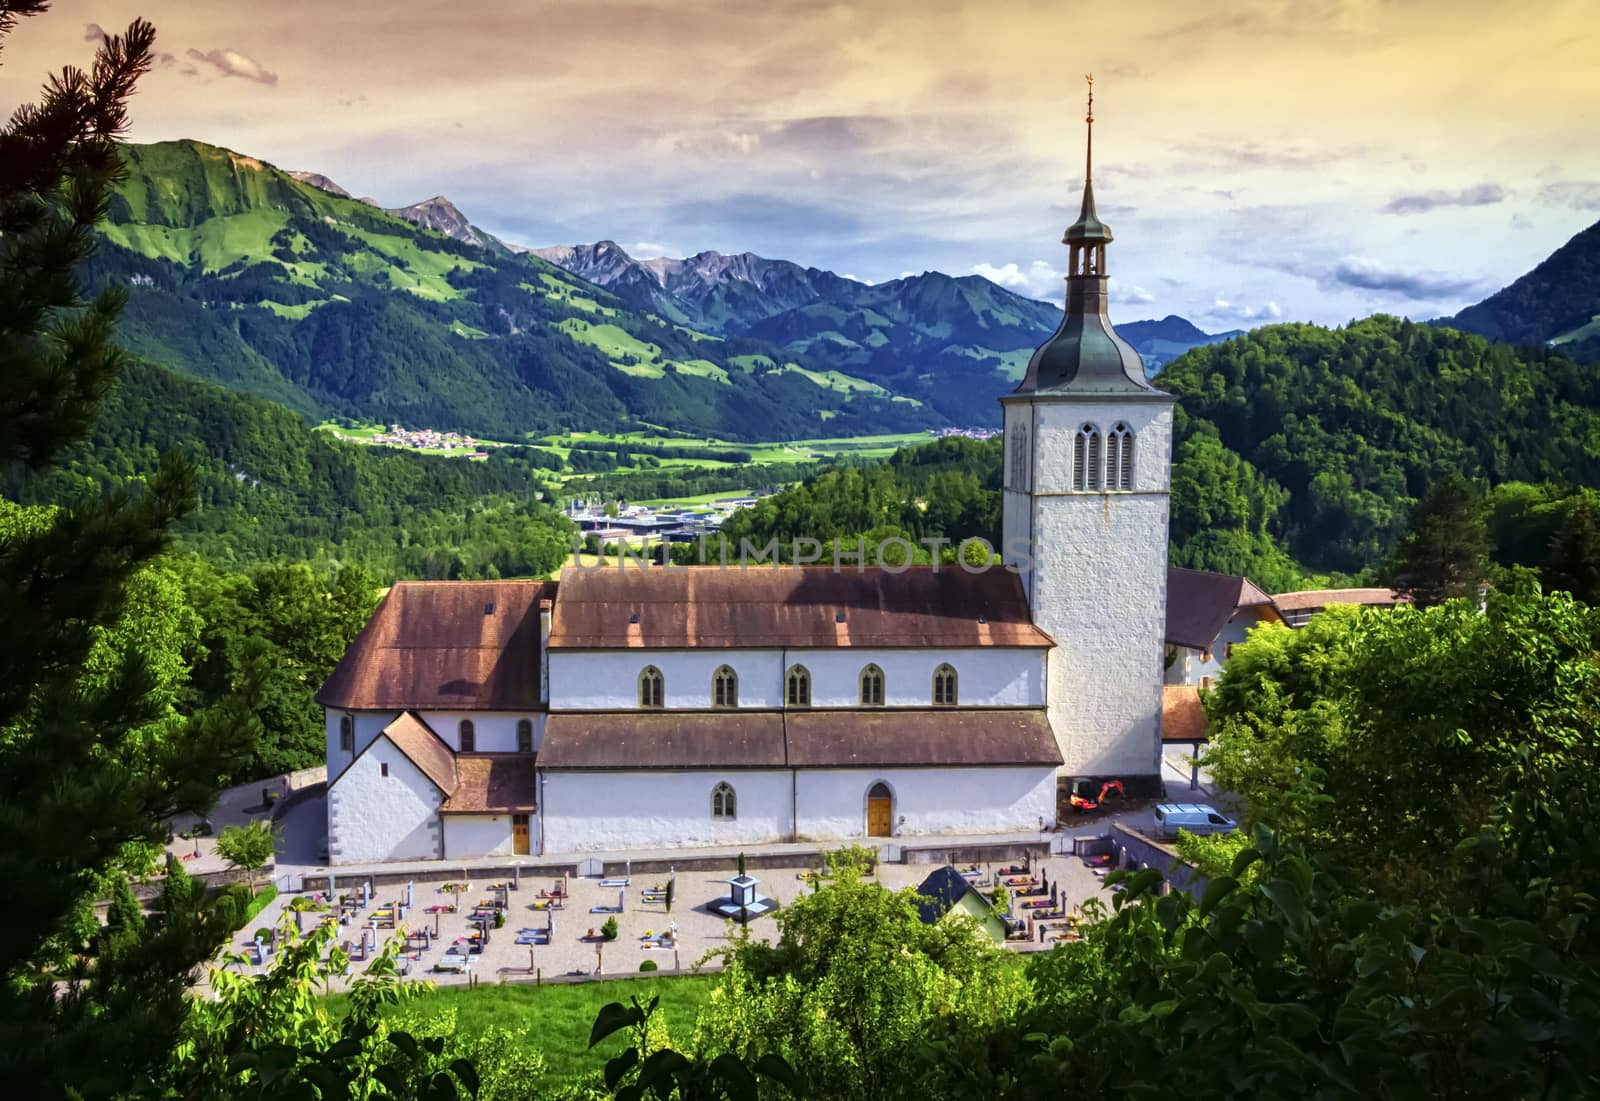 Saint-Theodule church, Gruyeres, Switzerland by Elenaphotos21